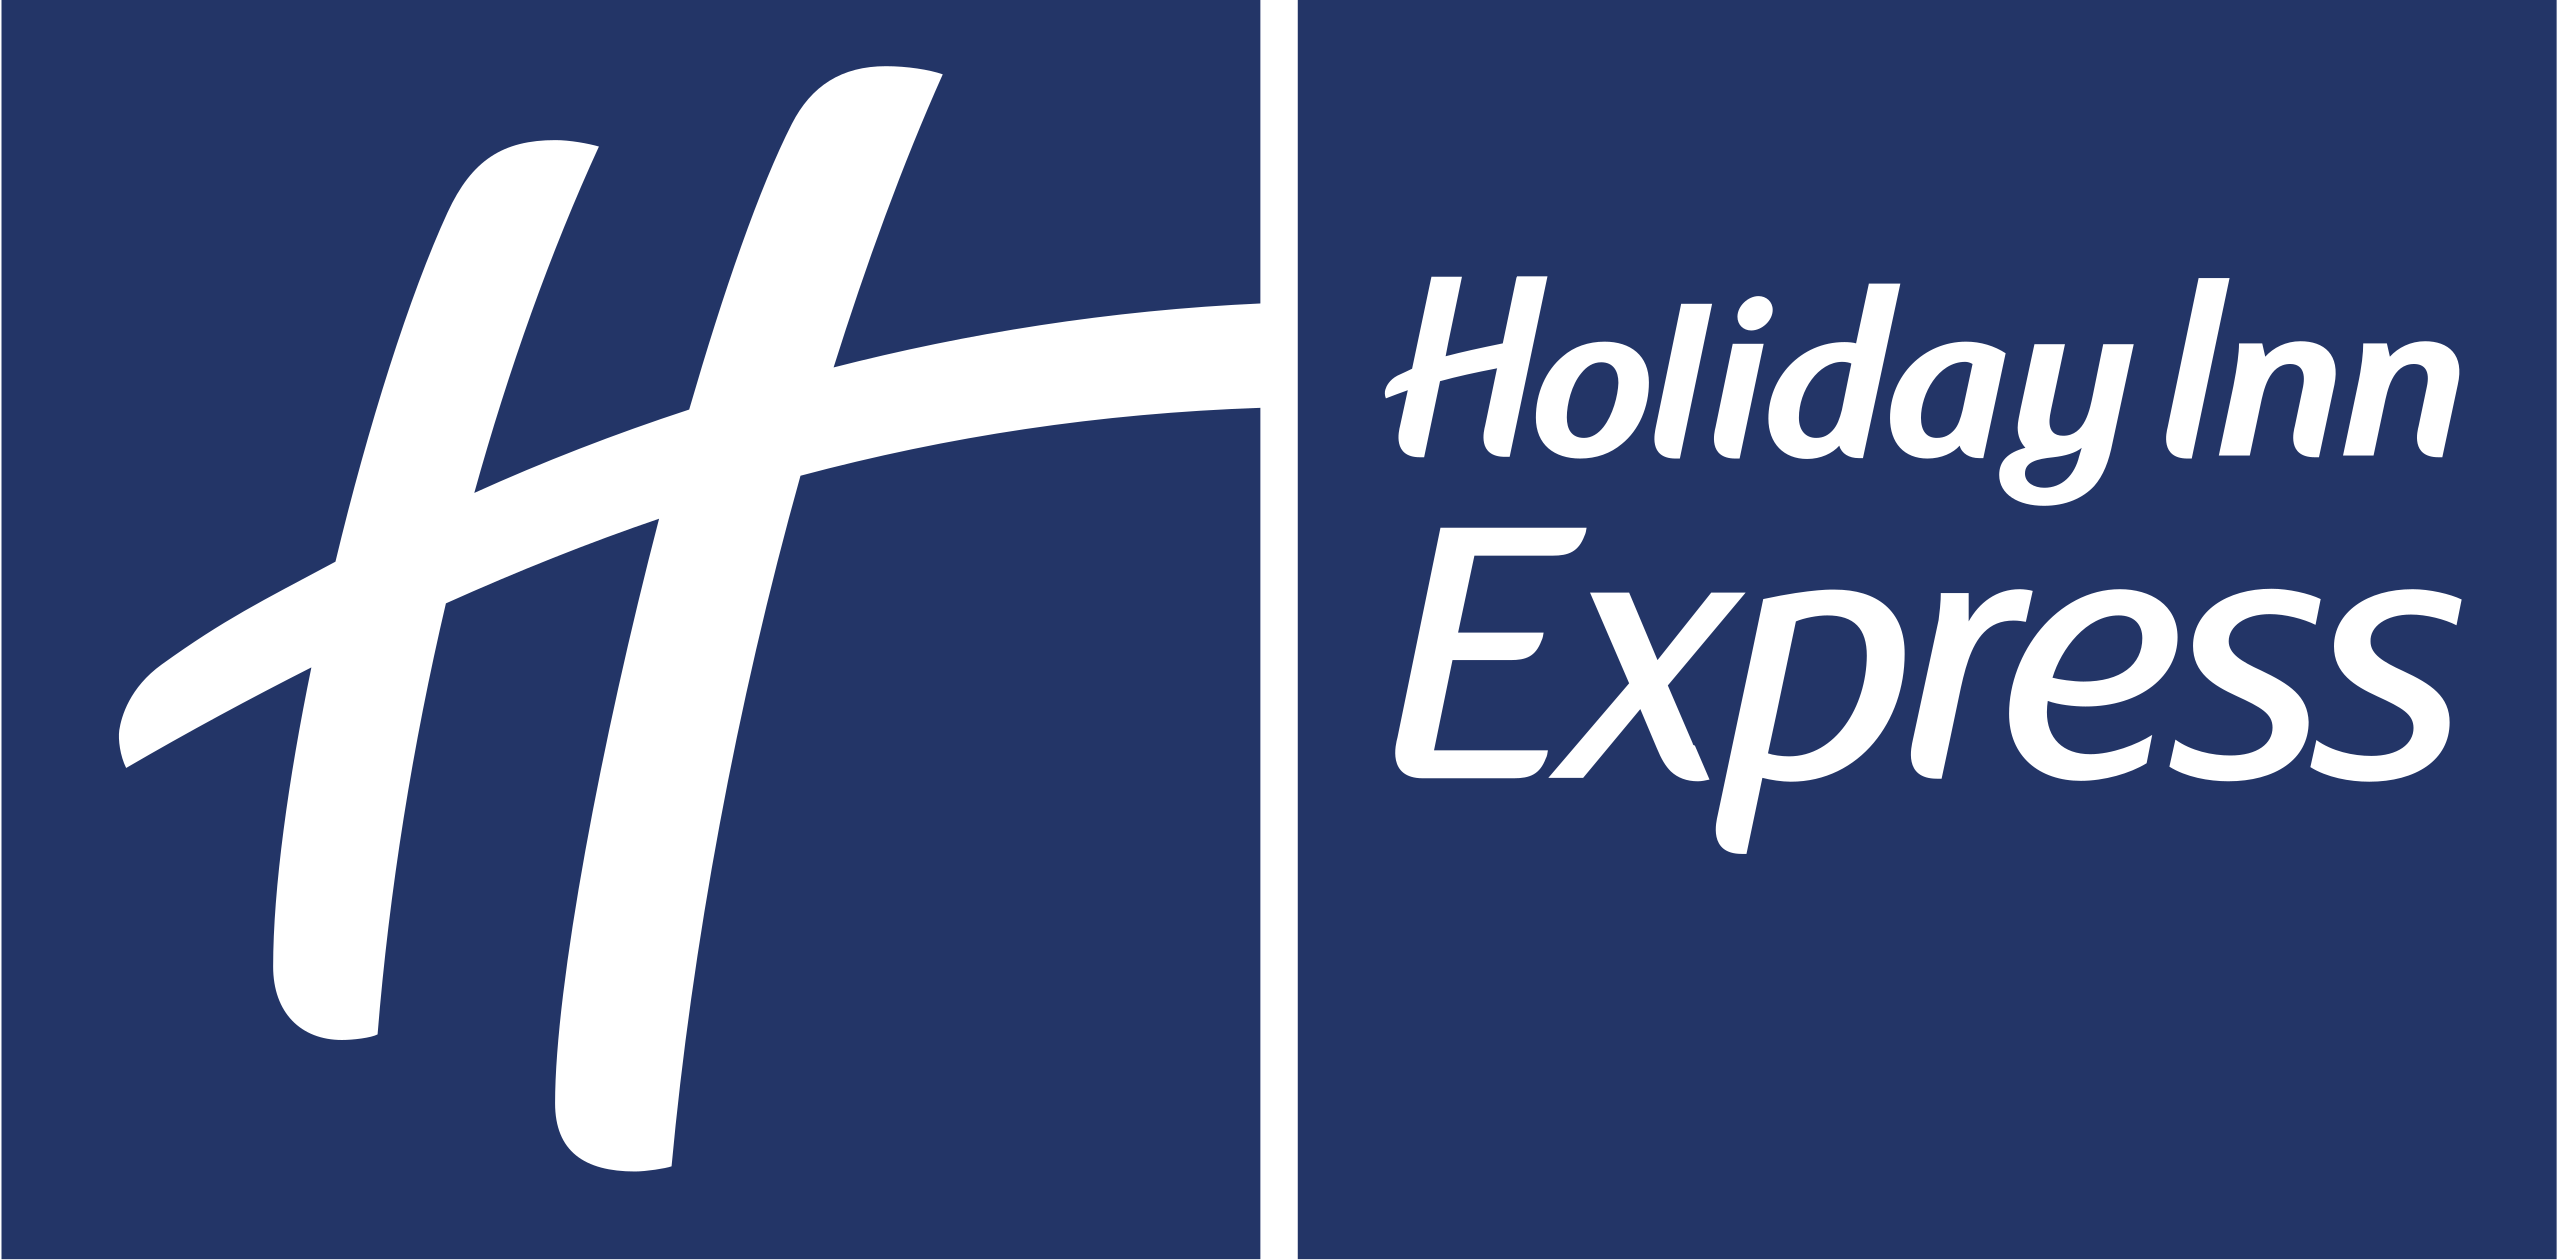 The Holiday Inn Express logo.